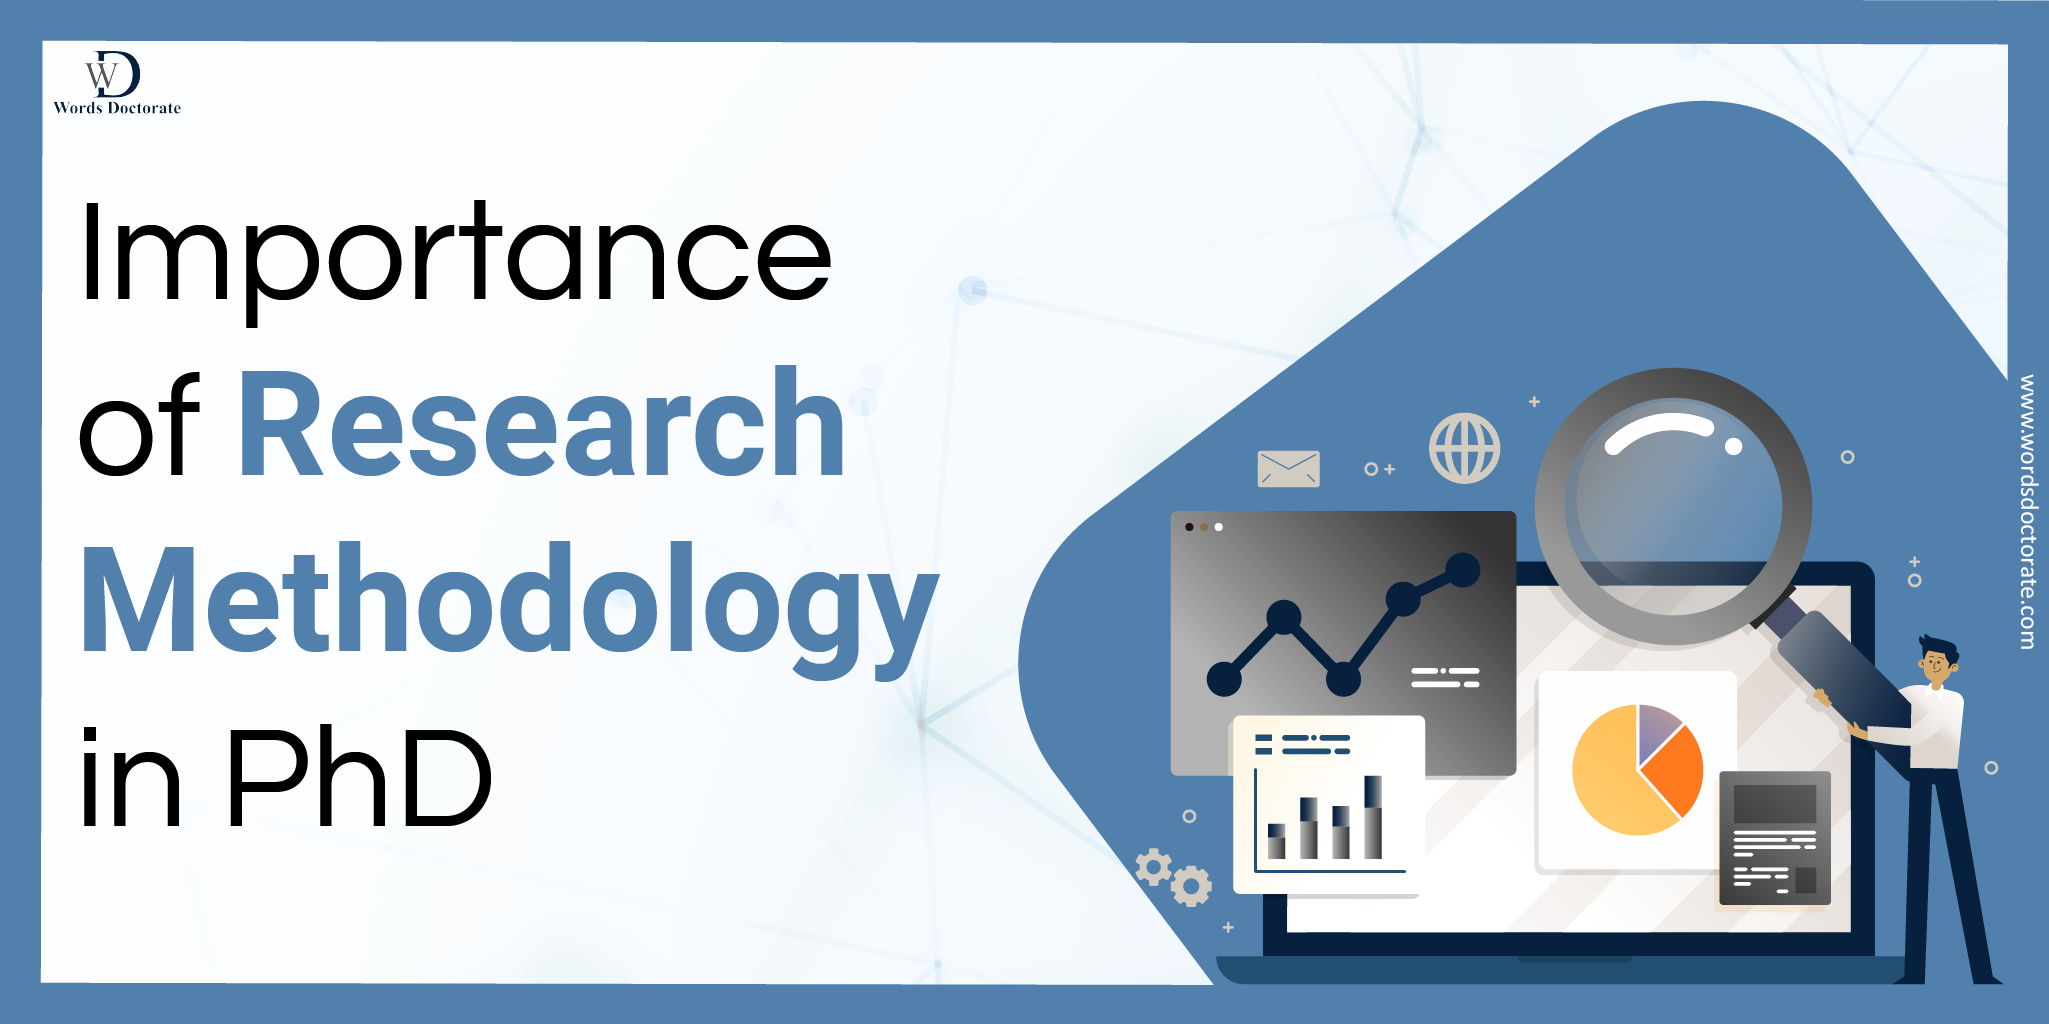 phd research methodology